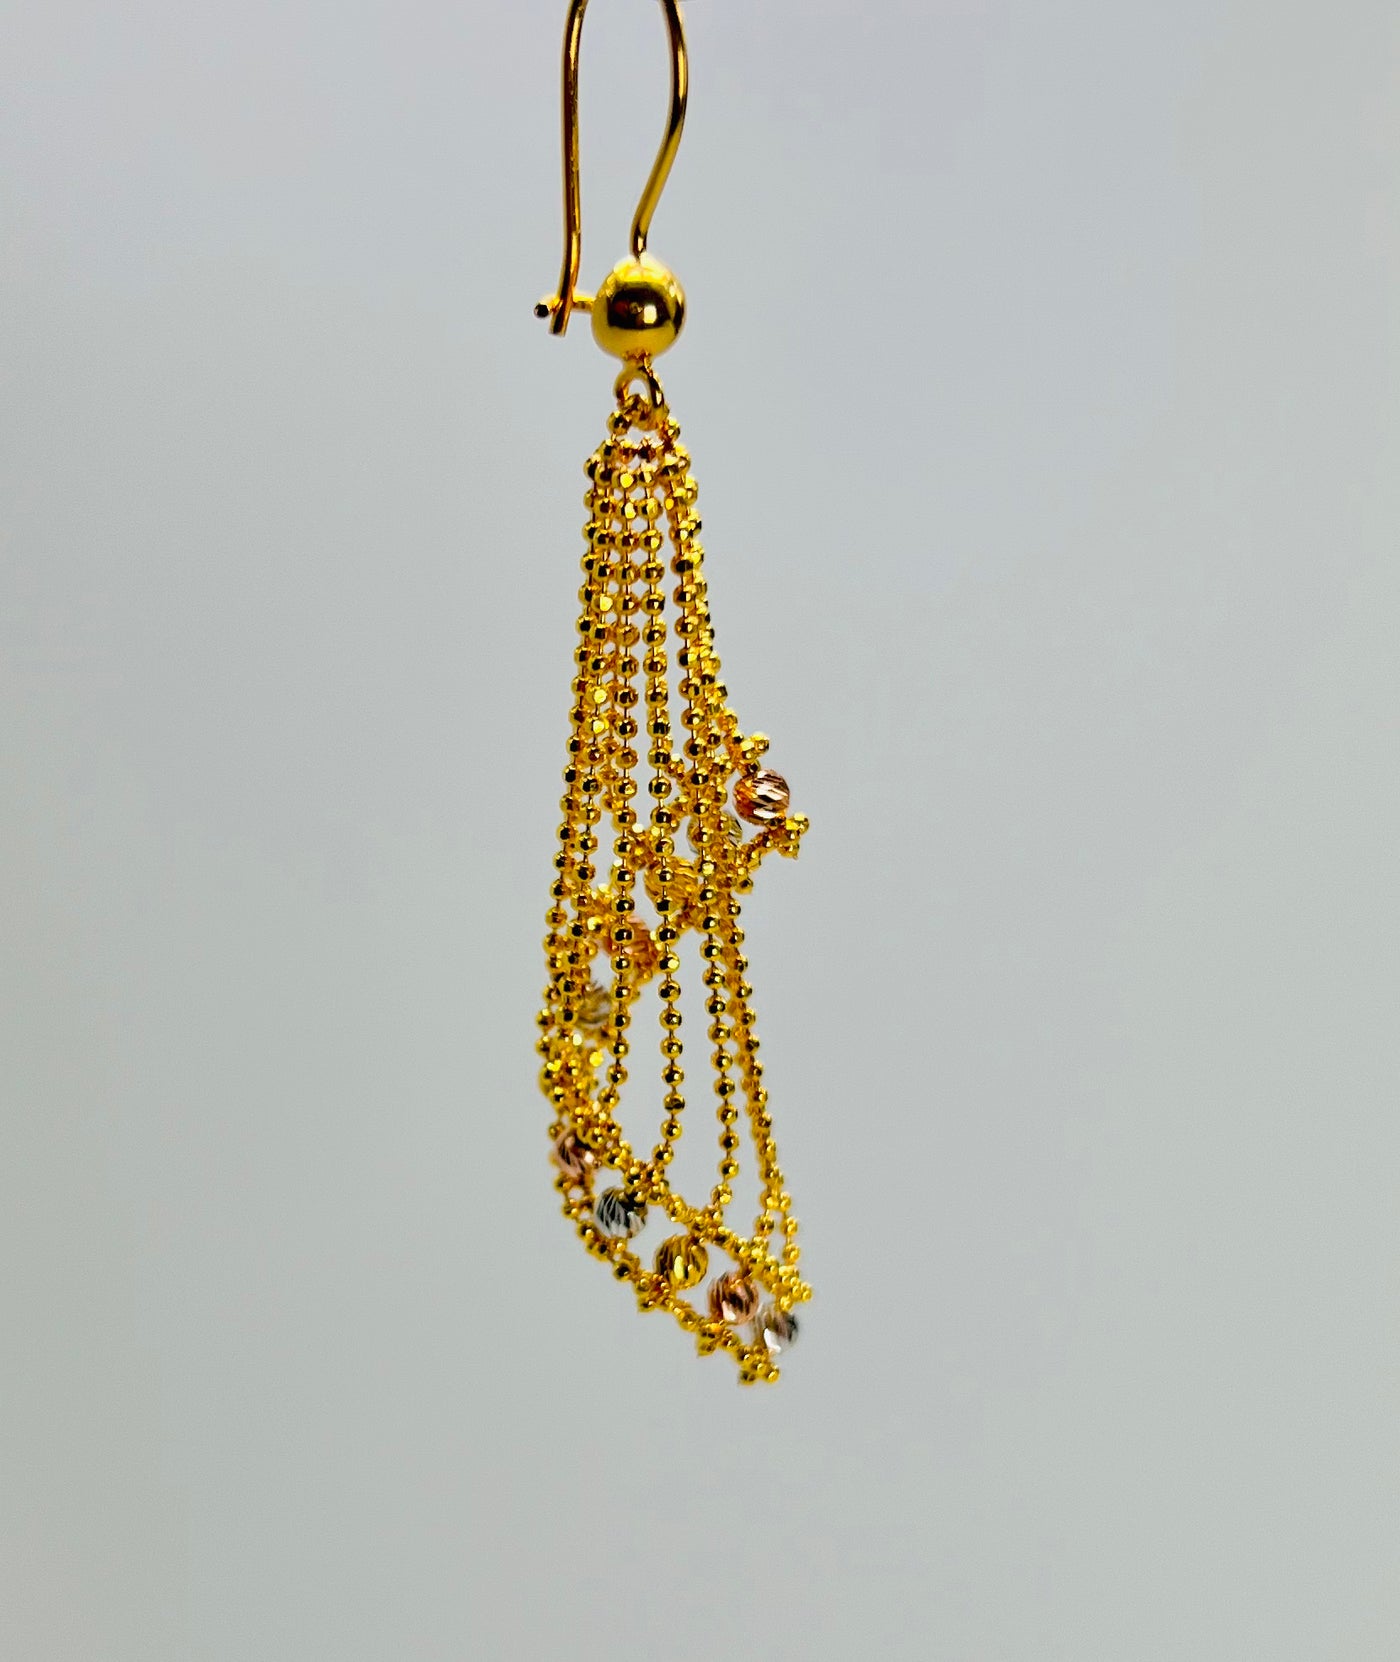 21k Tri-Color Gold Necklace Set